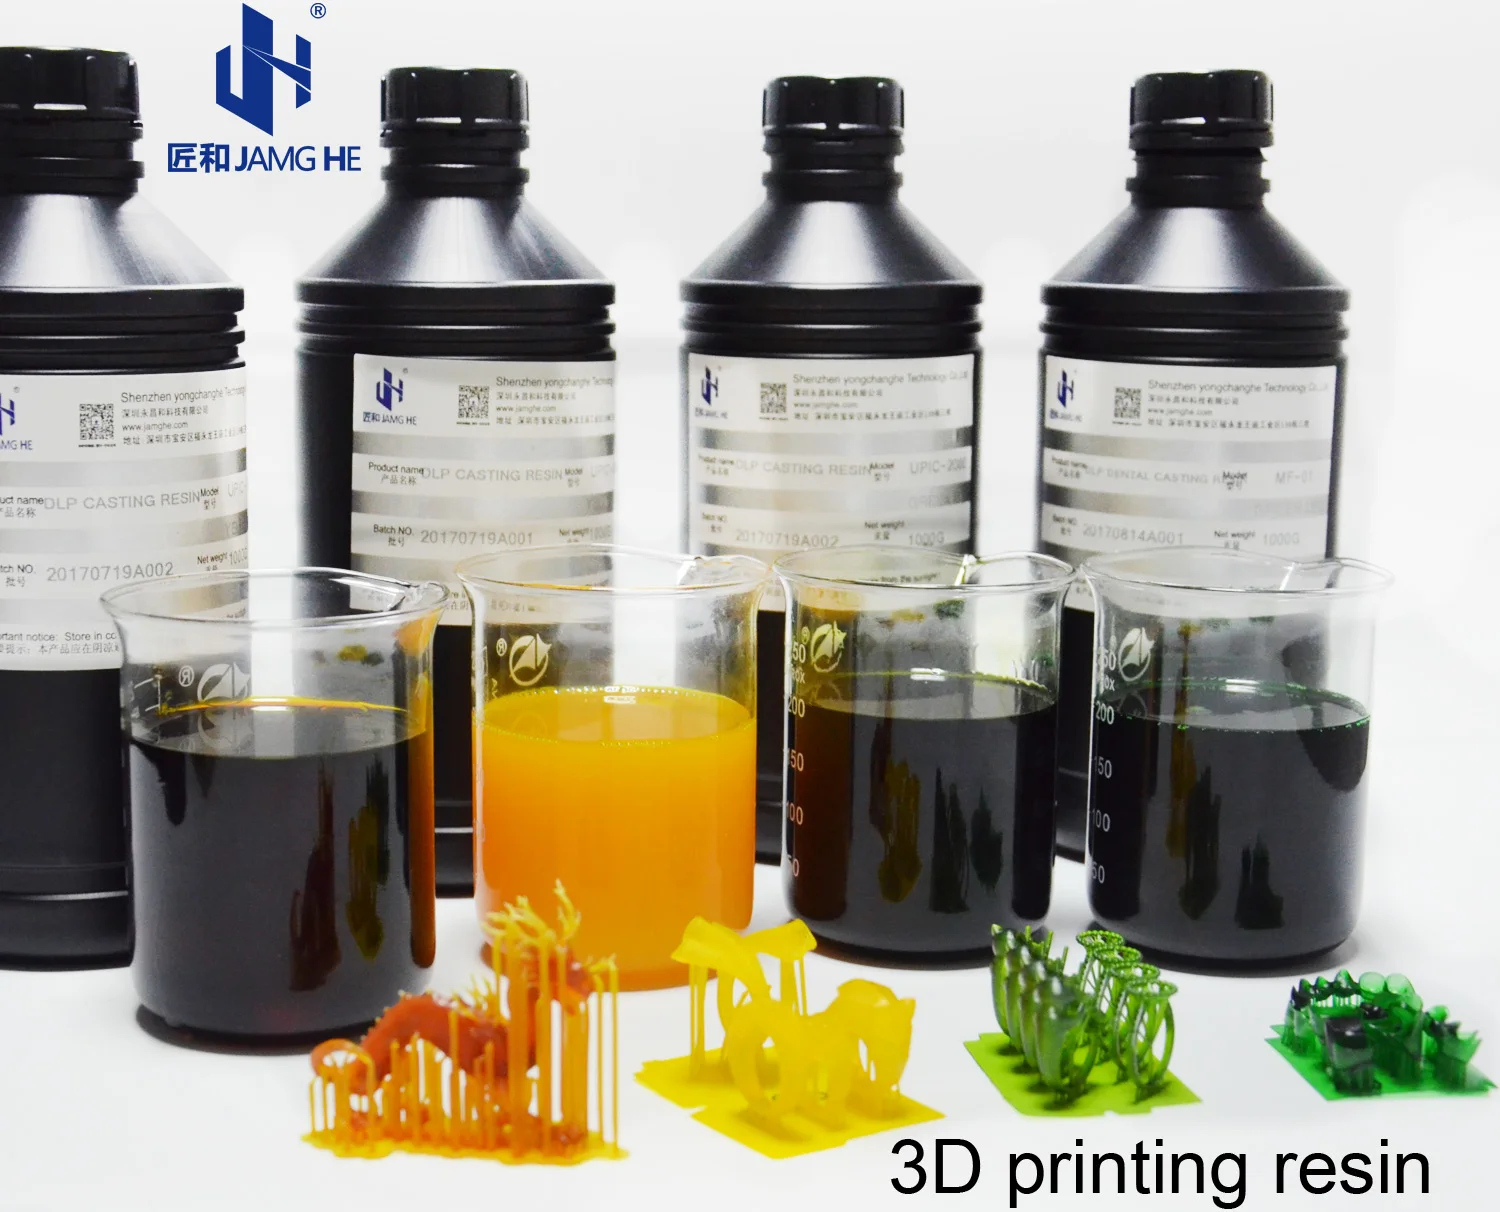 JAMG HE 3D printer casting resin for 405nm